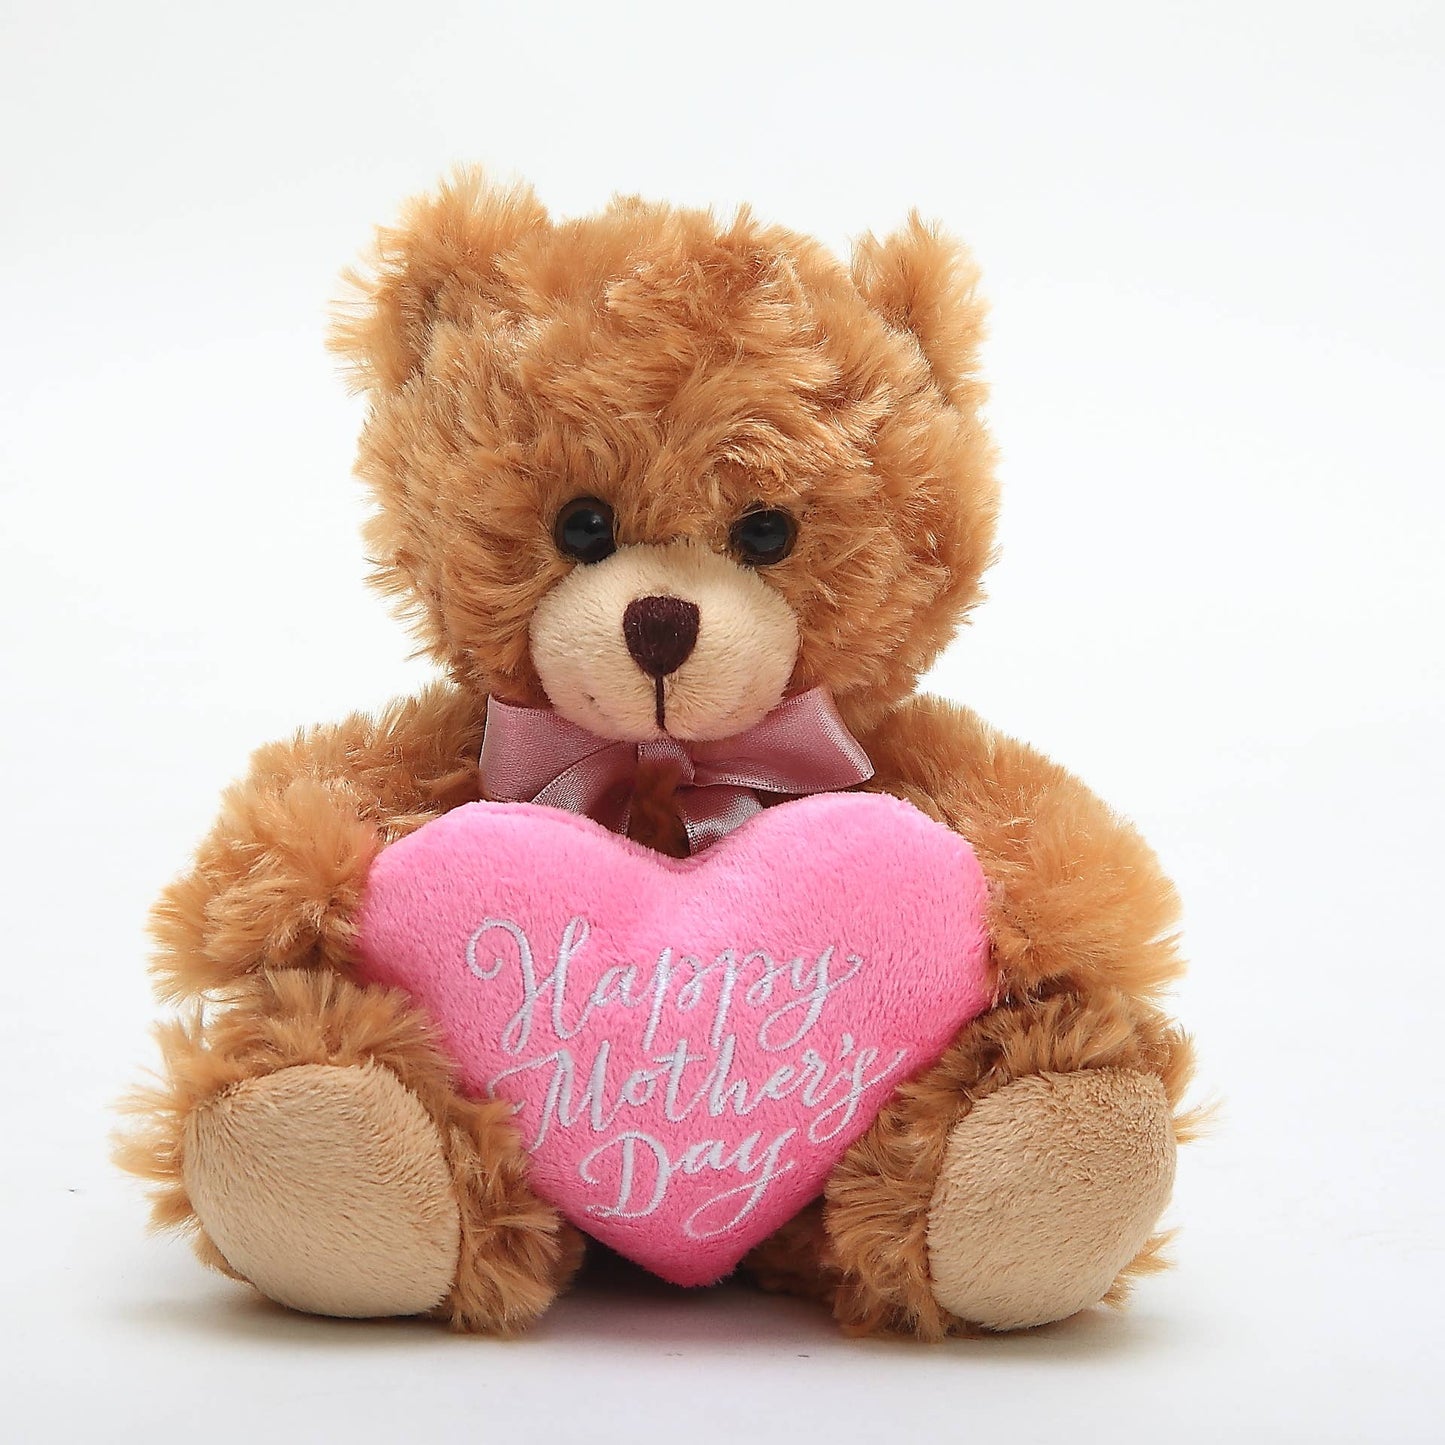 Happy Mother's Day Teddy Bear